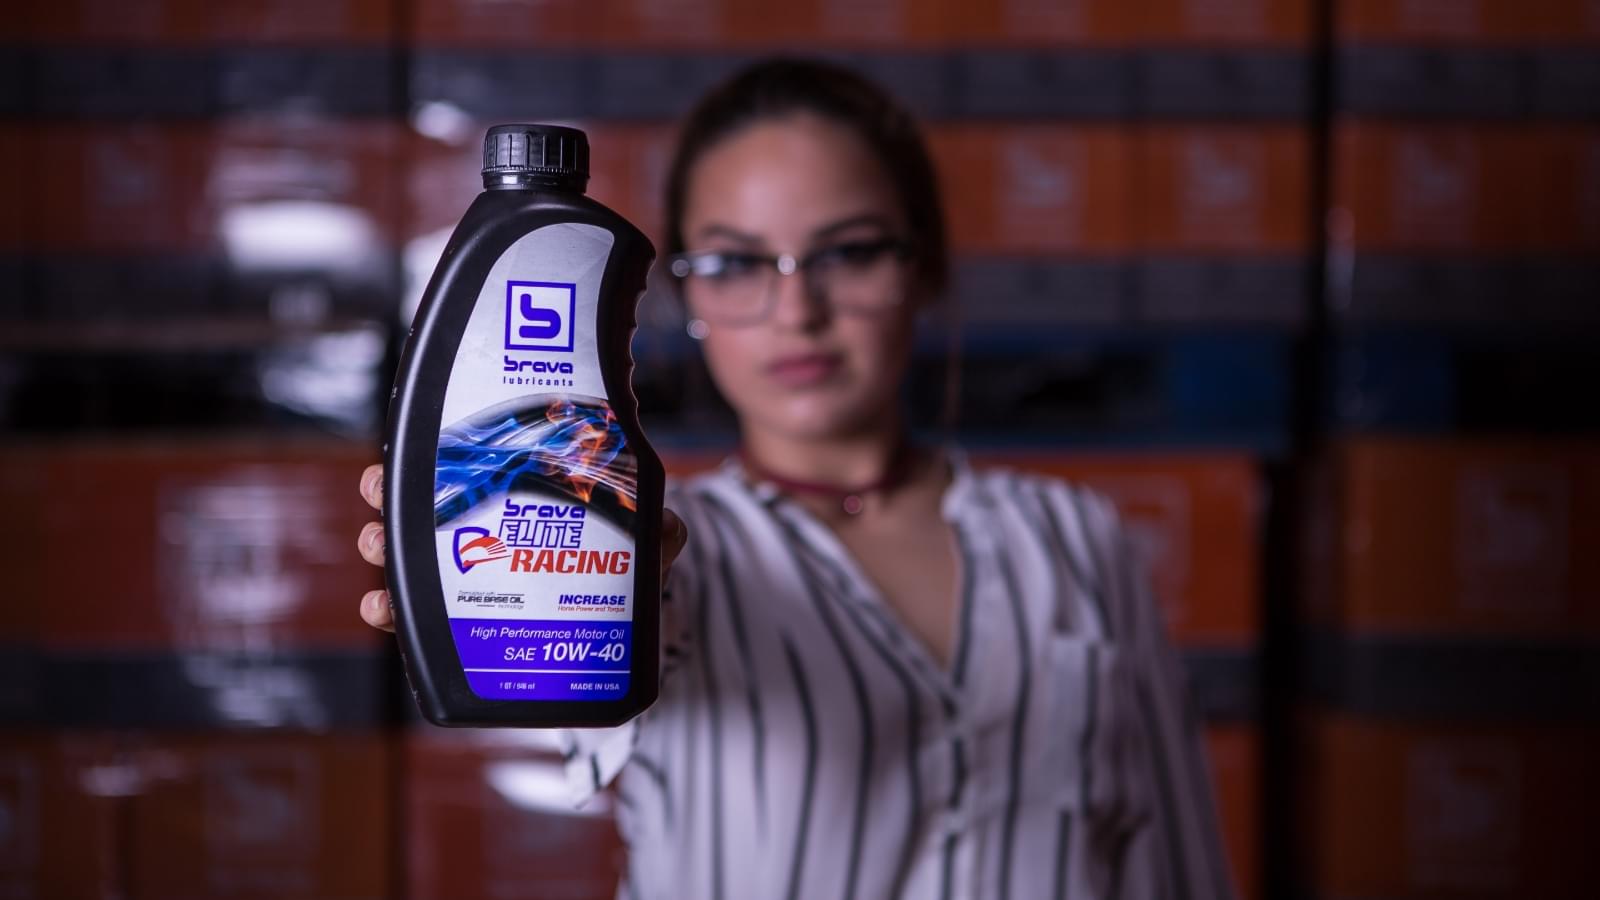 woman holding brava elite racing oil product bottle